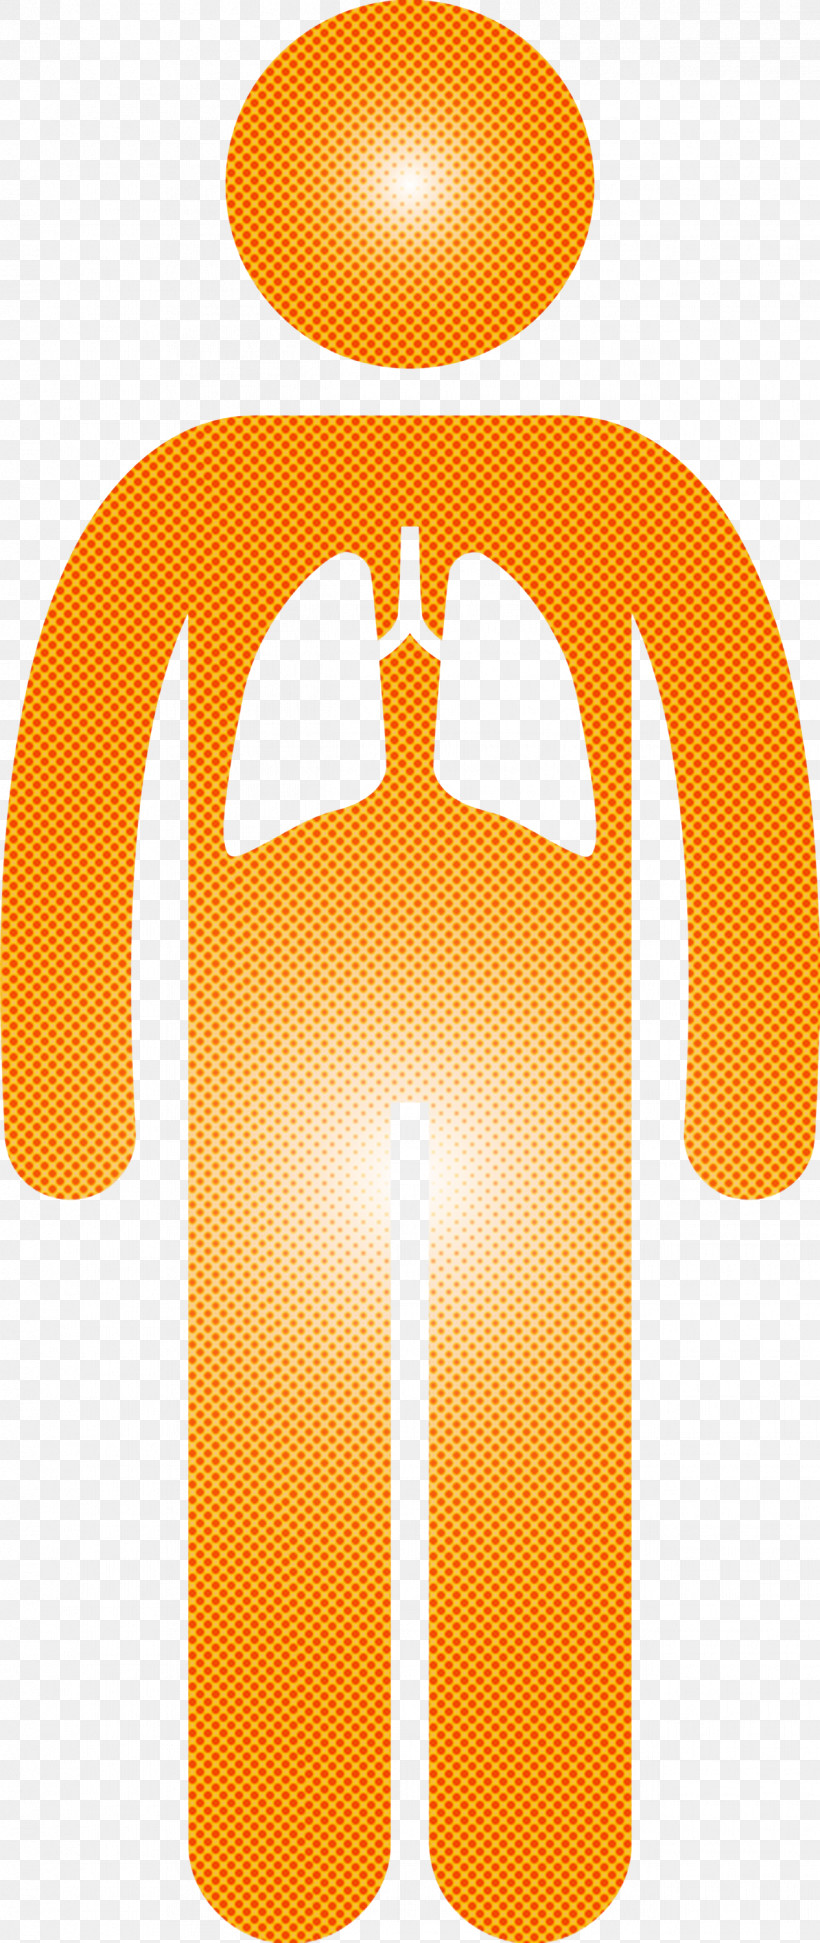 Lungs People Corona Virus Disease, PNG, 1265x2998px, Lungs, Corona Virus Disease, Jersey, Orange, People Download Free